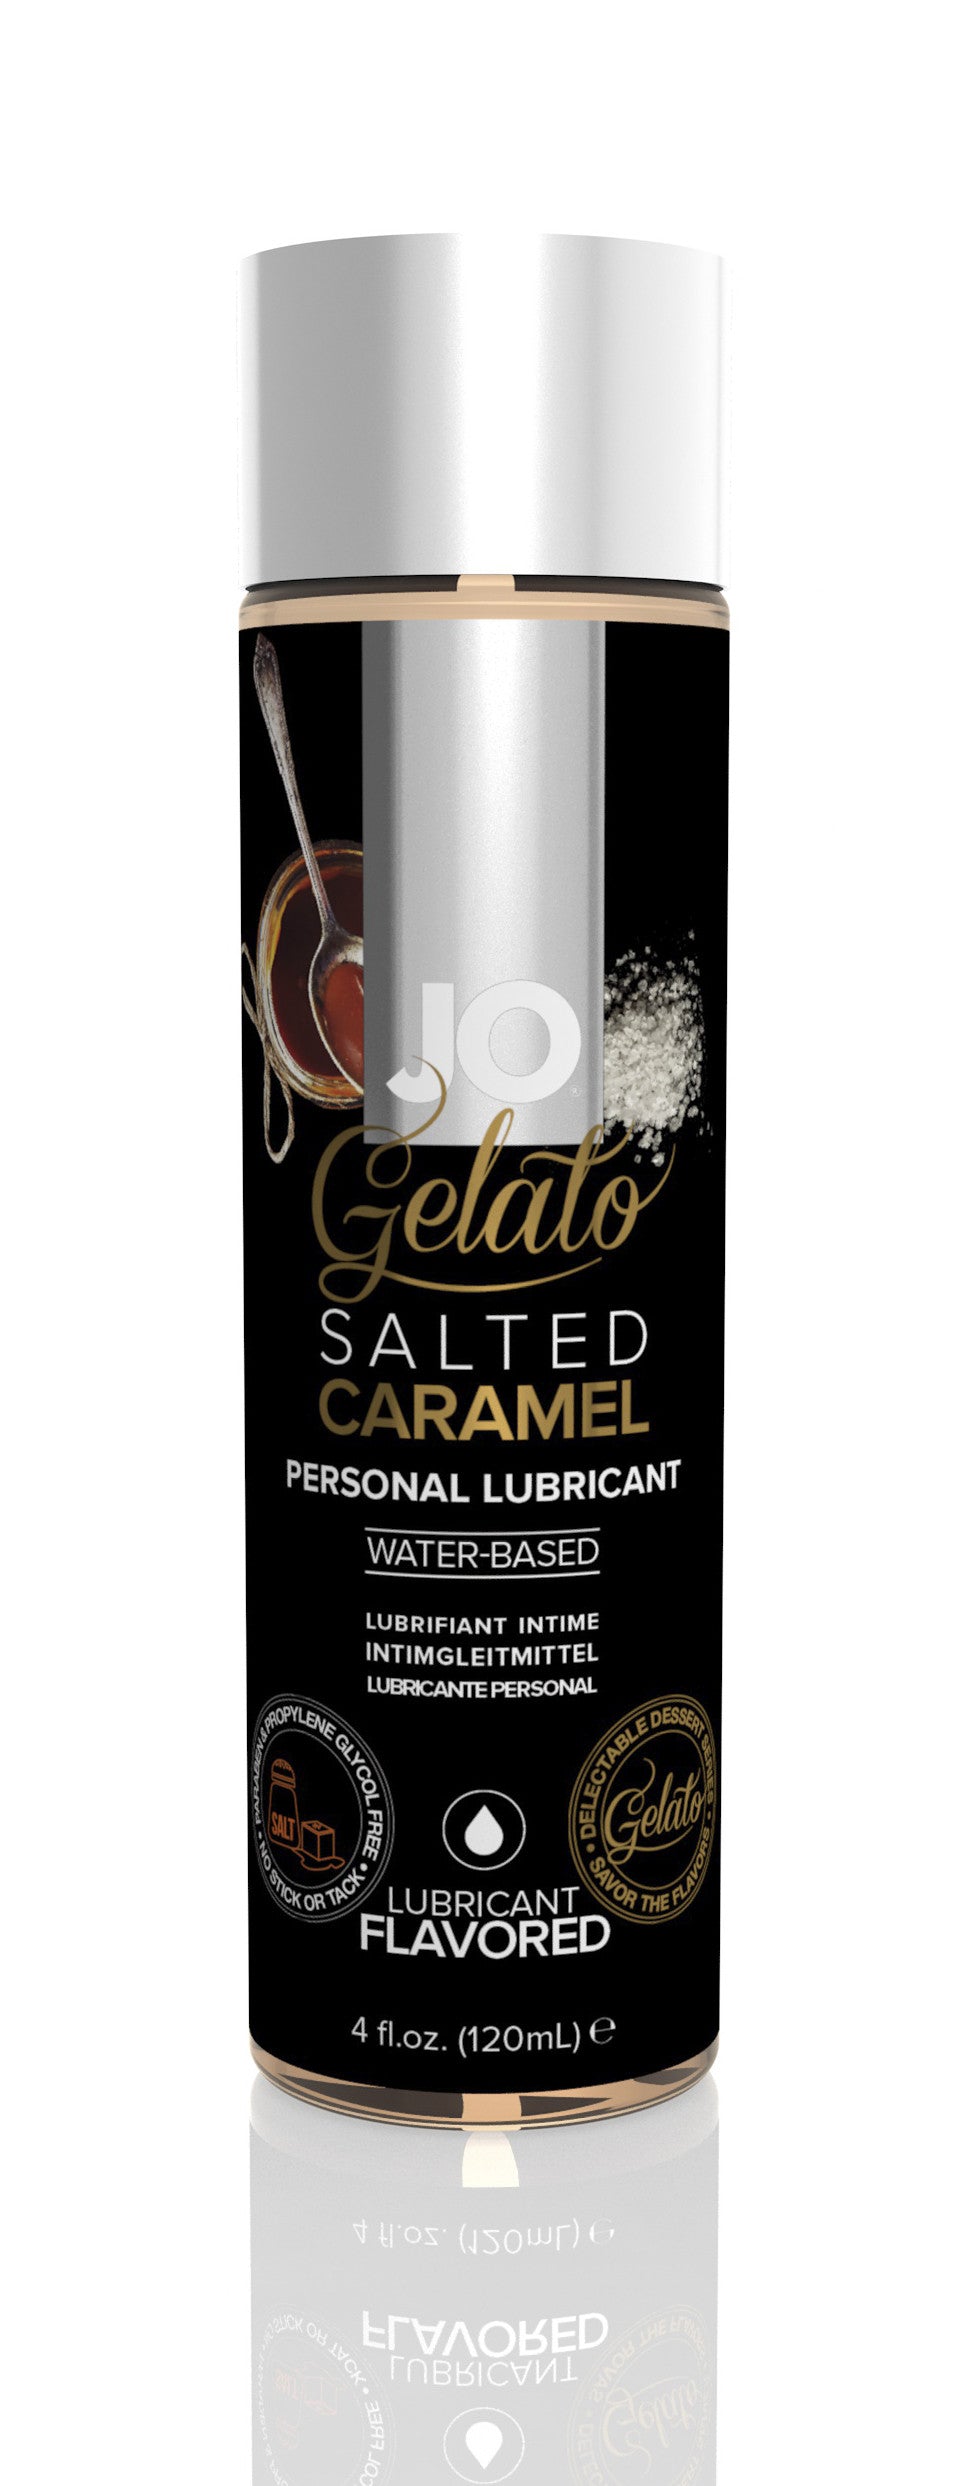 Jo Gelato Salted Caramel Water-Based Flavored Lubricant - 4 Fl. Oz. / 120 ml